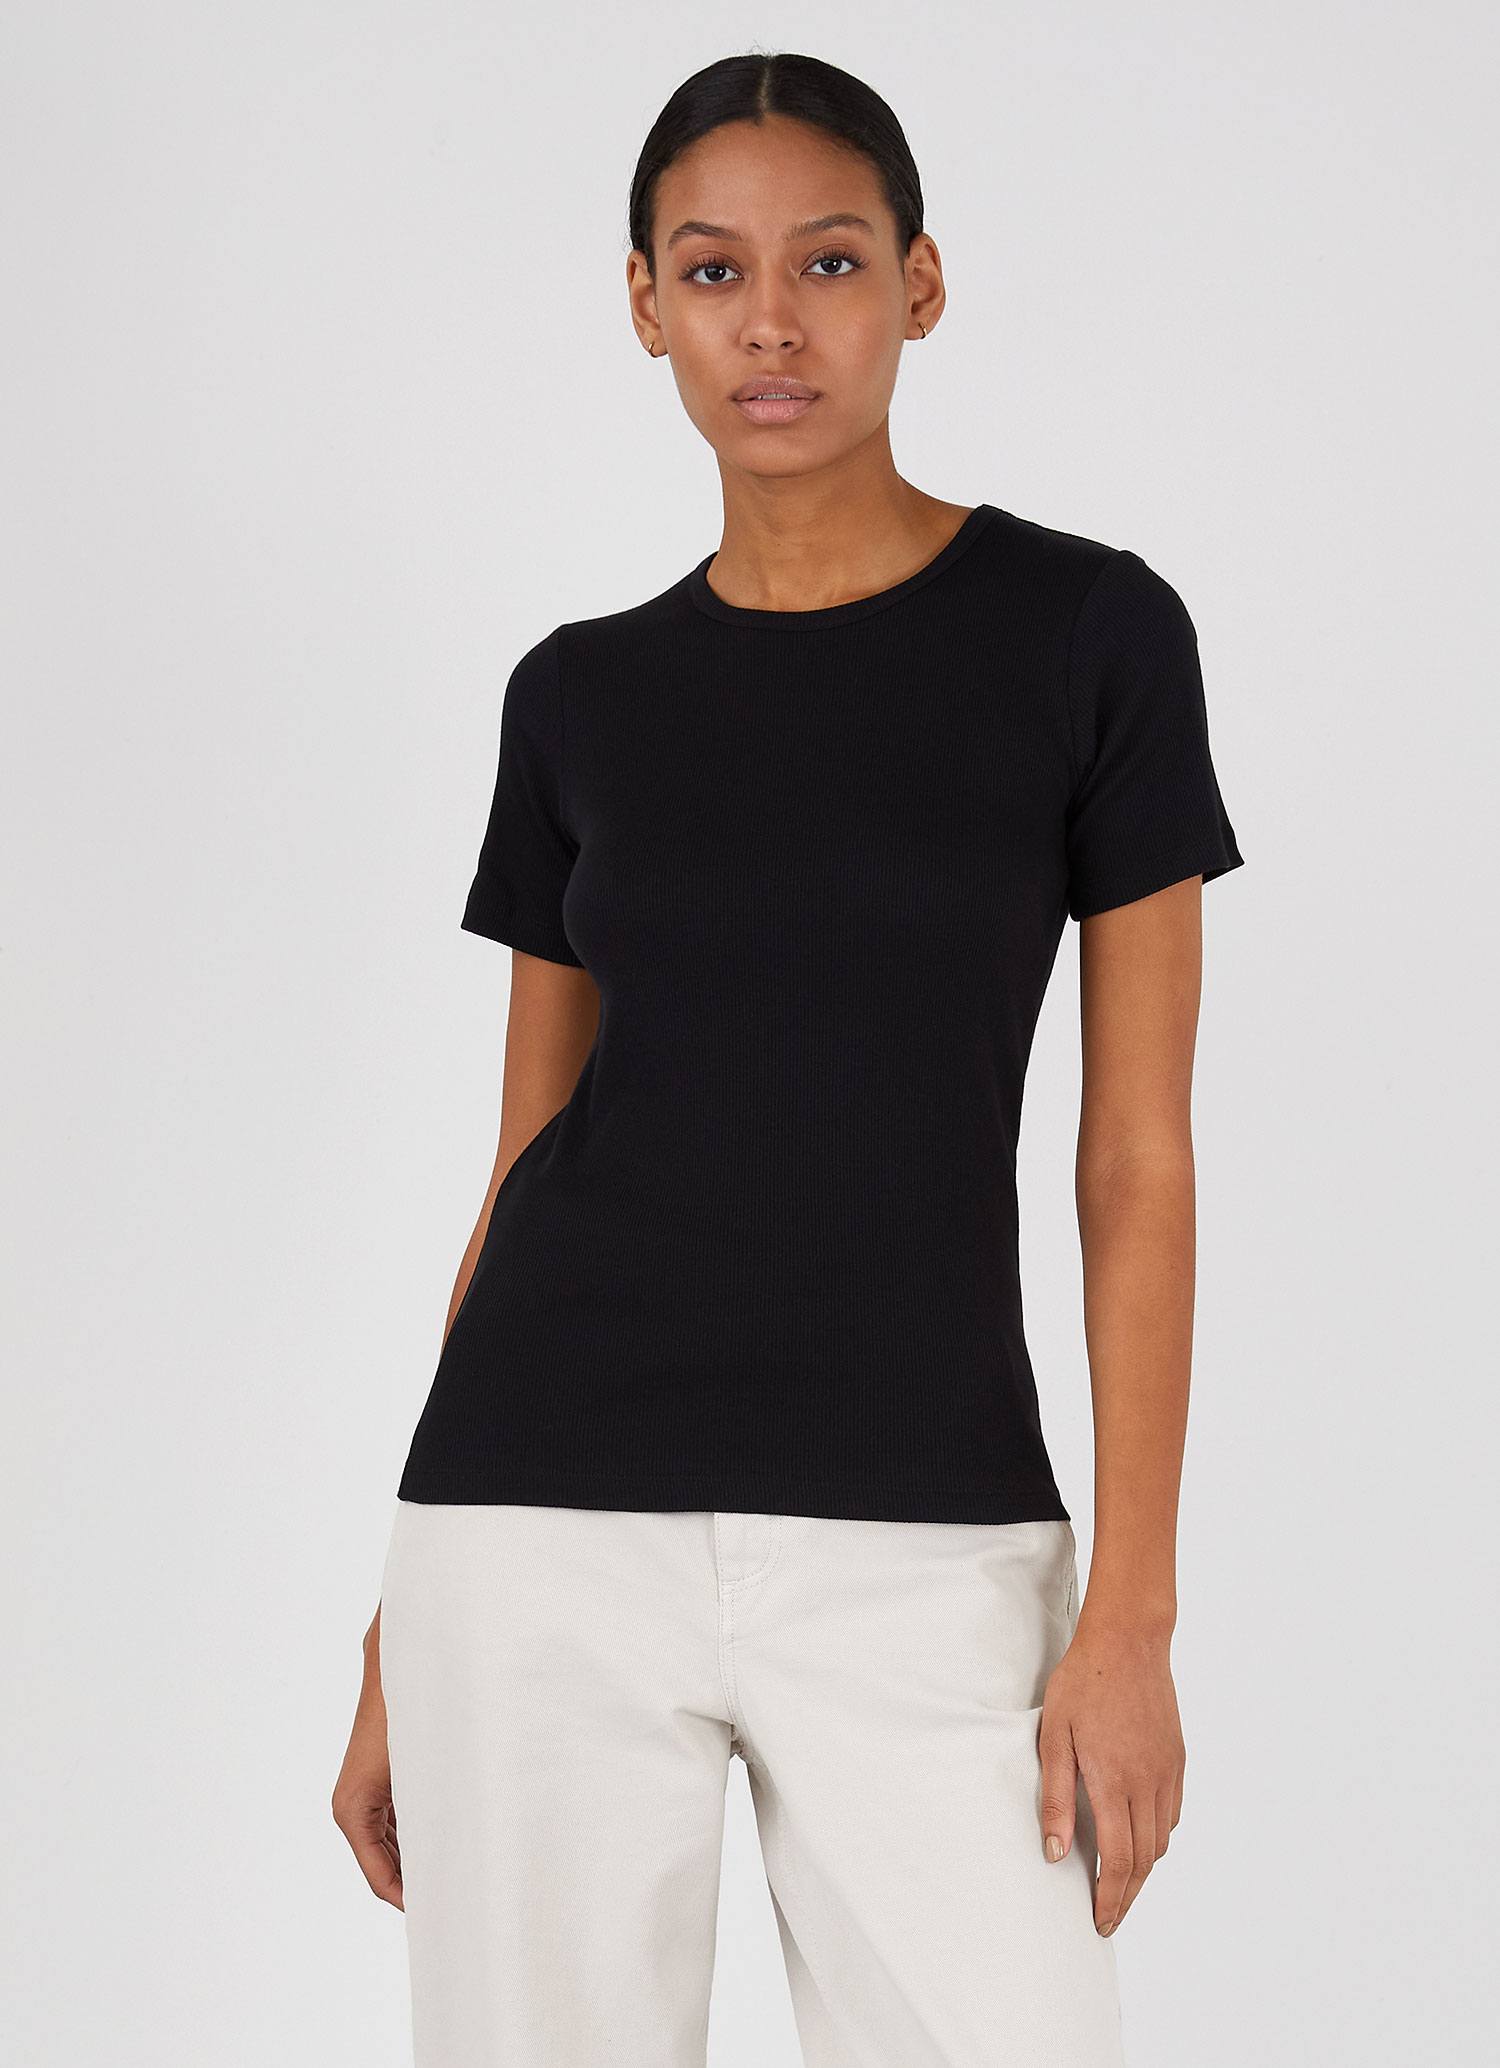 Women's Rib T-shirt in Black | Sunspel